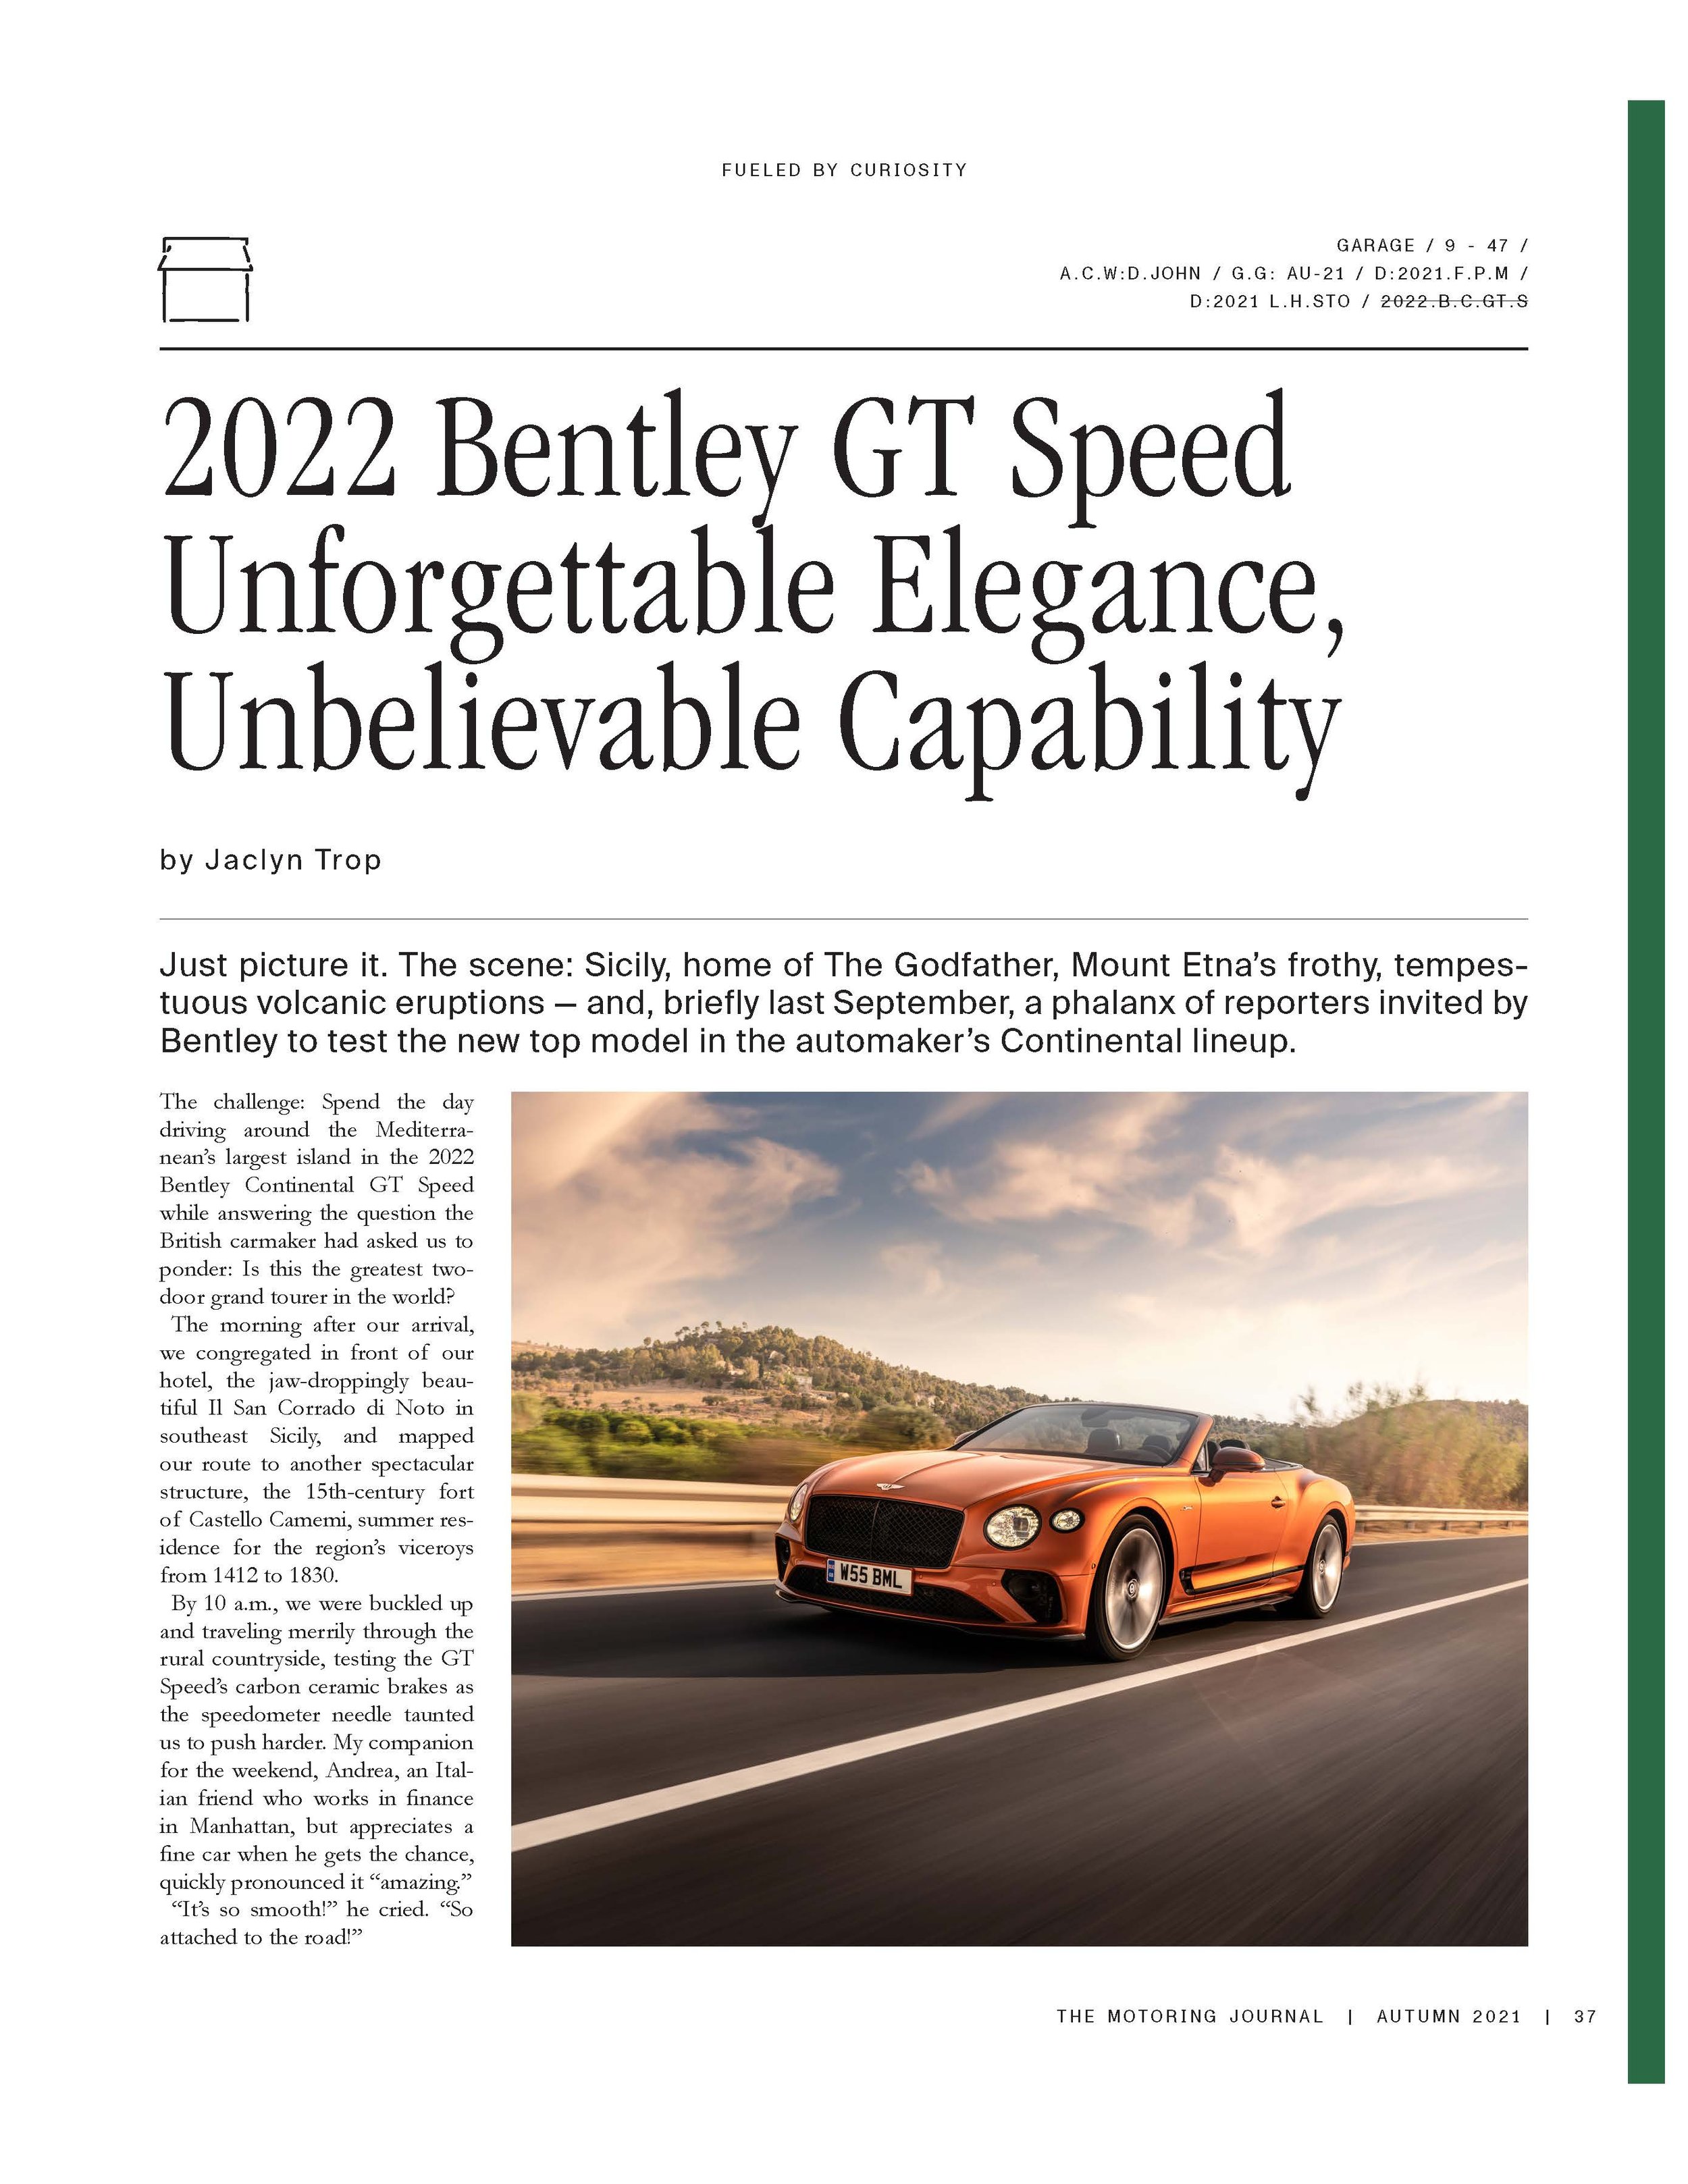 Bentley Continental GT Speed (2)_Page_02.jpg